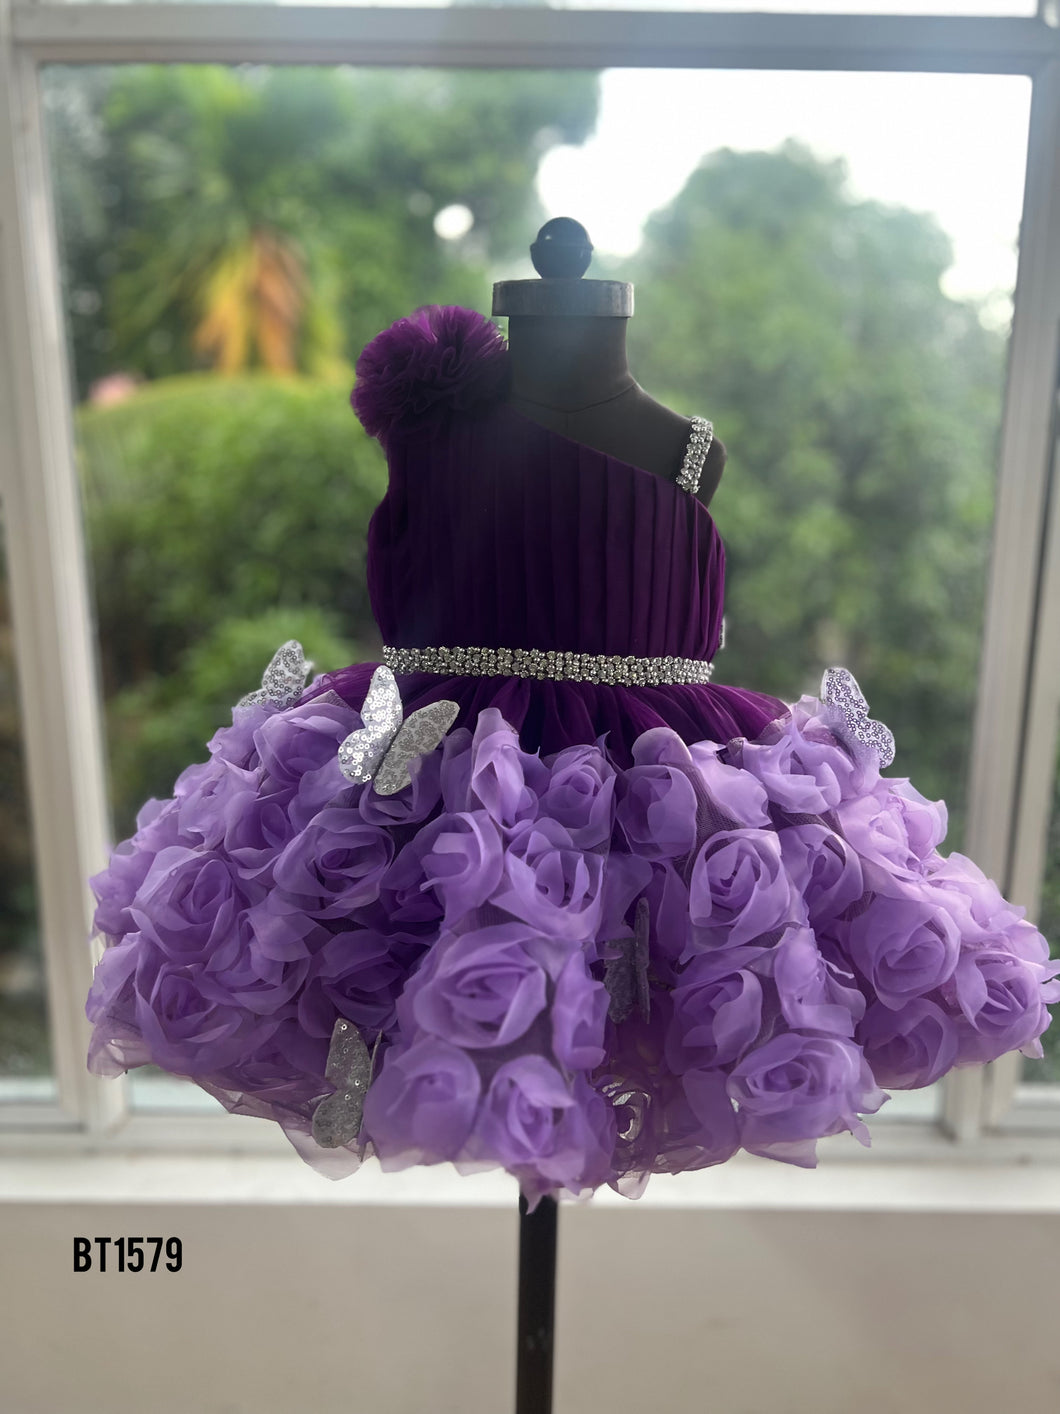 BT1579 Regal Lilac Rose Dress - A Fairytale in Purple!